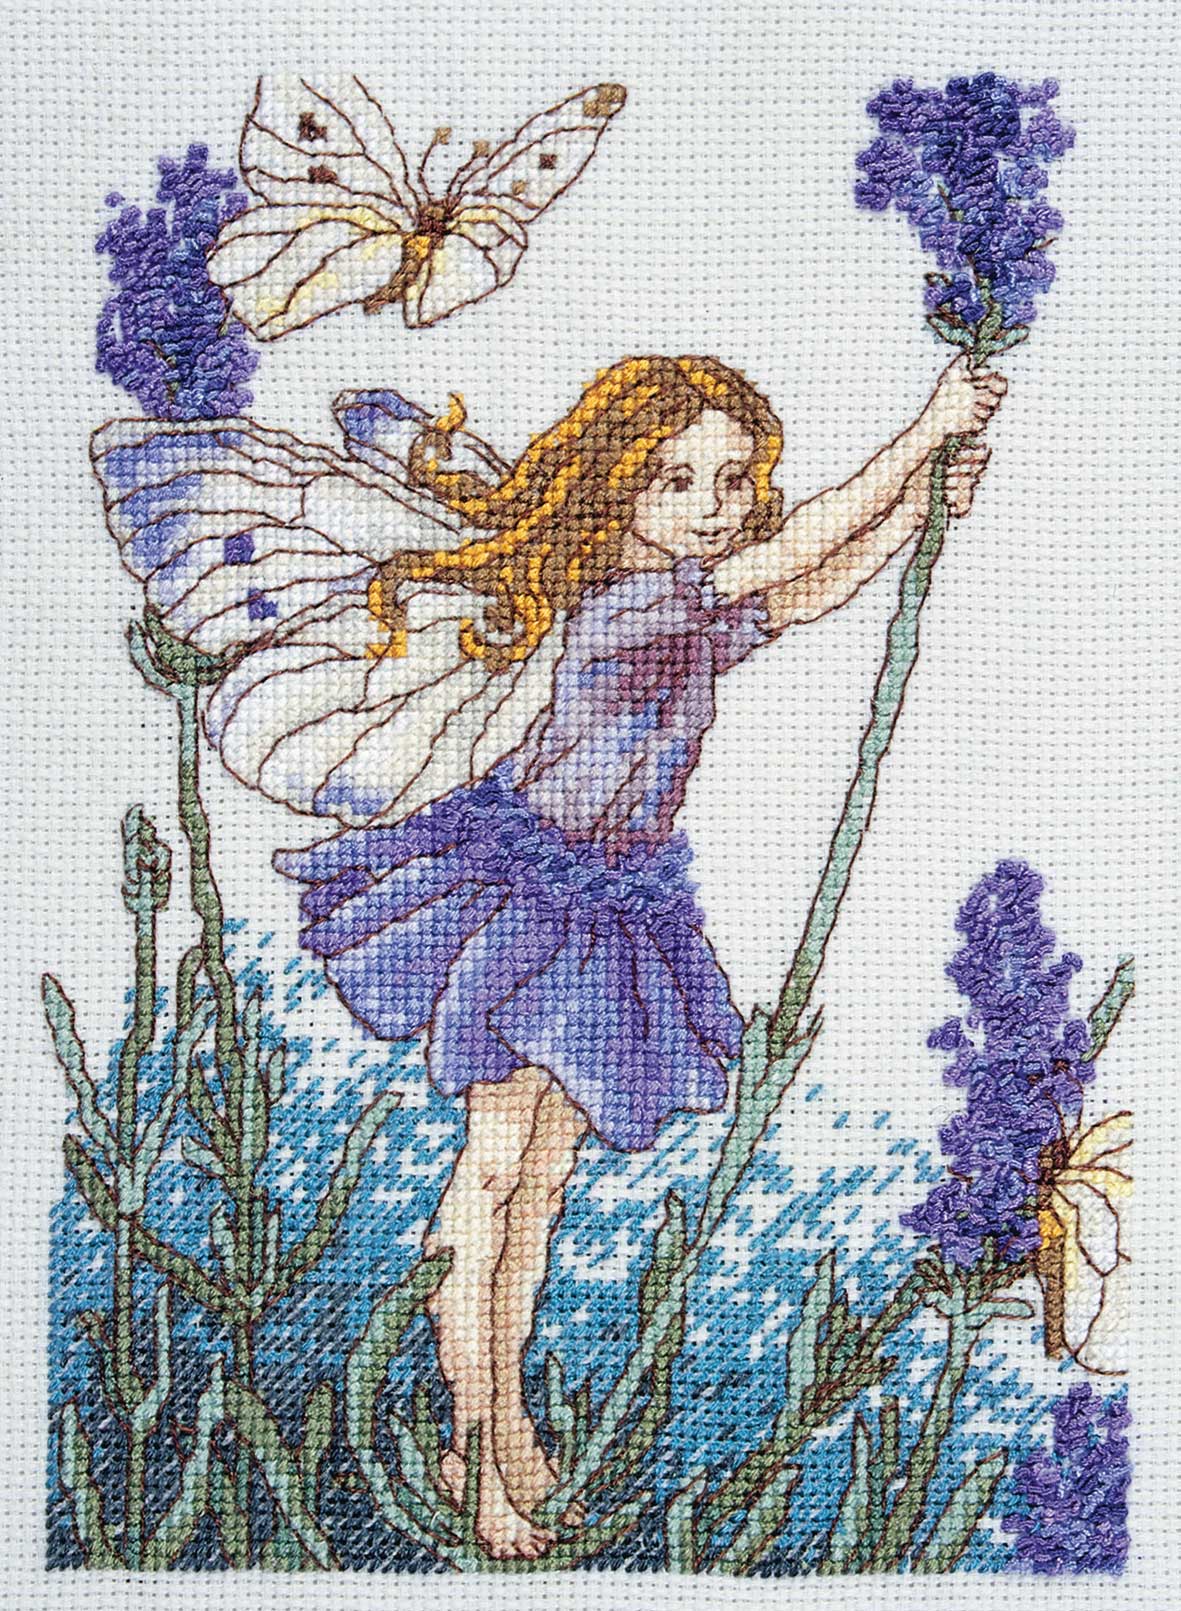 DMC Cross Stitch Kit - Flower Fairies - The Lavender Fairy | eBay